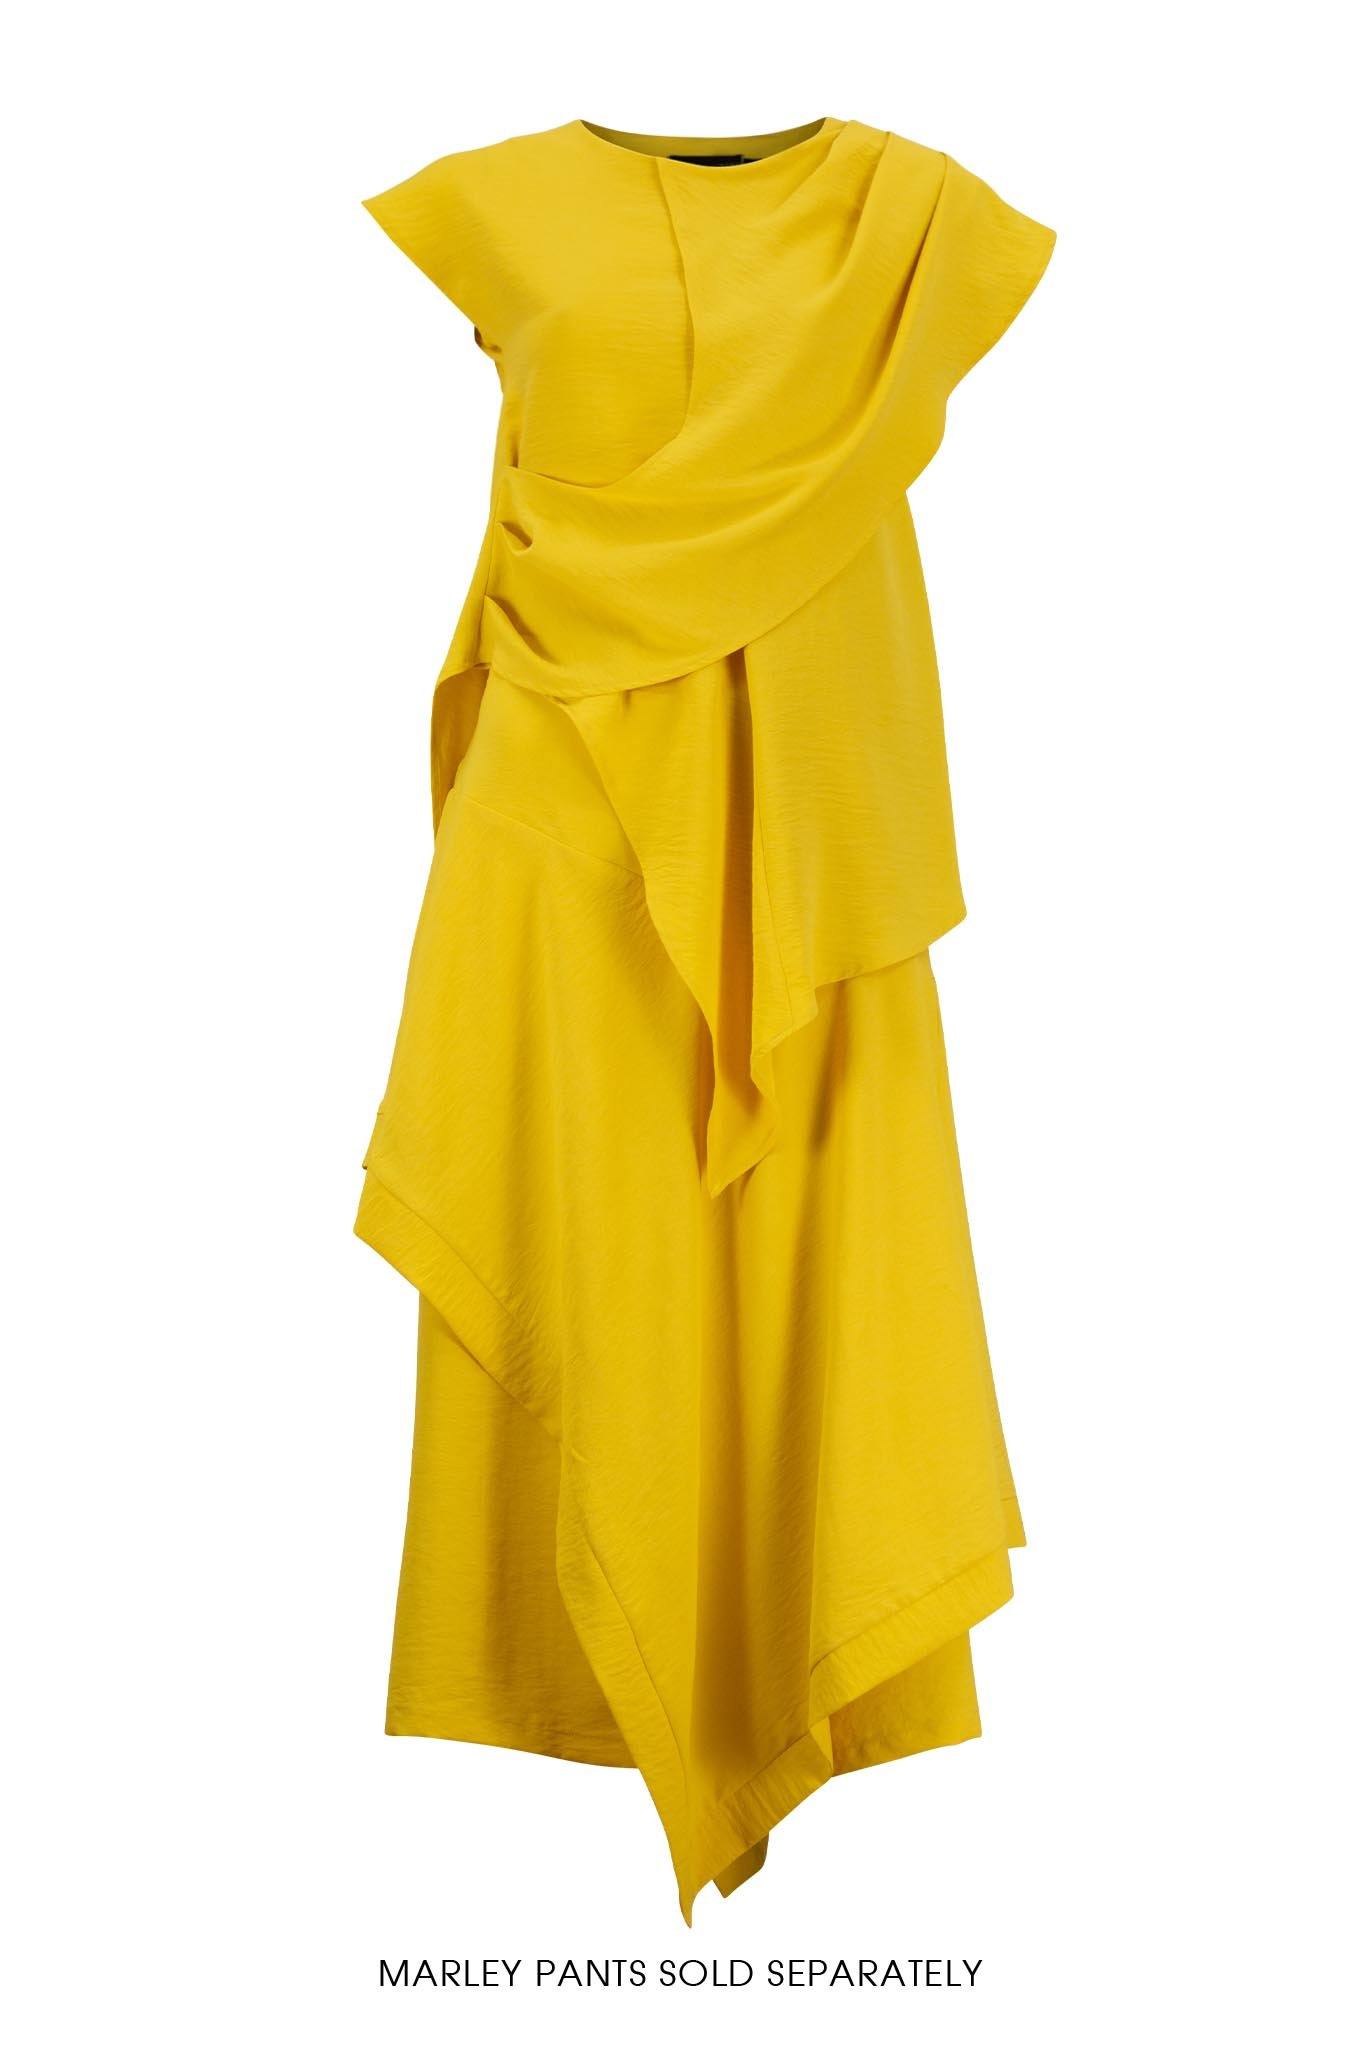 INDIA Canary Yellow Ladies Top - stok.